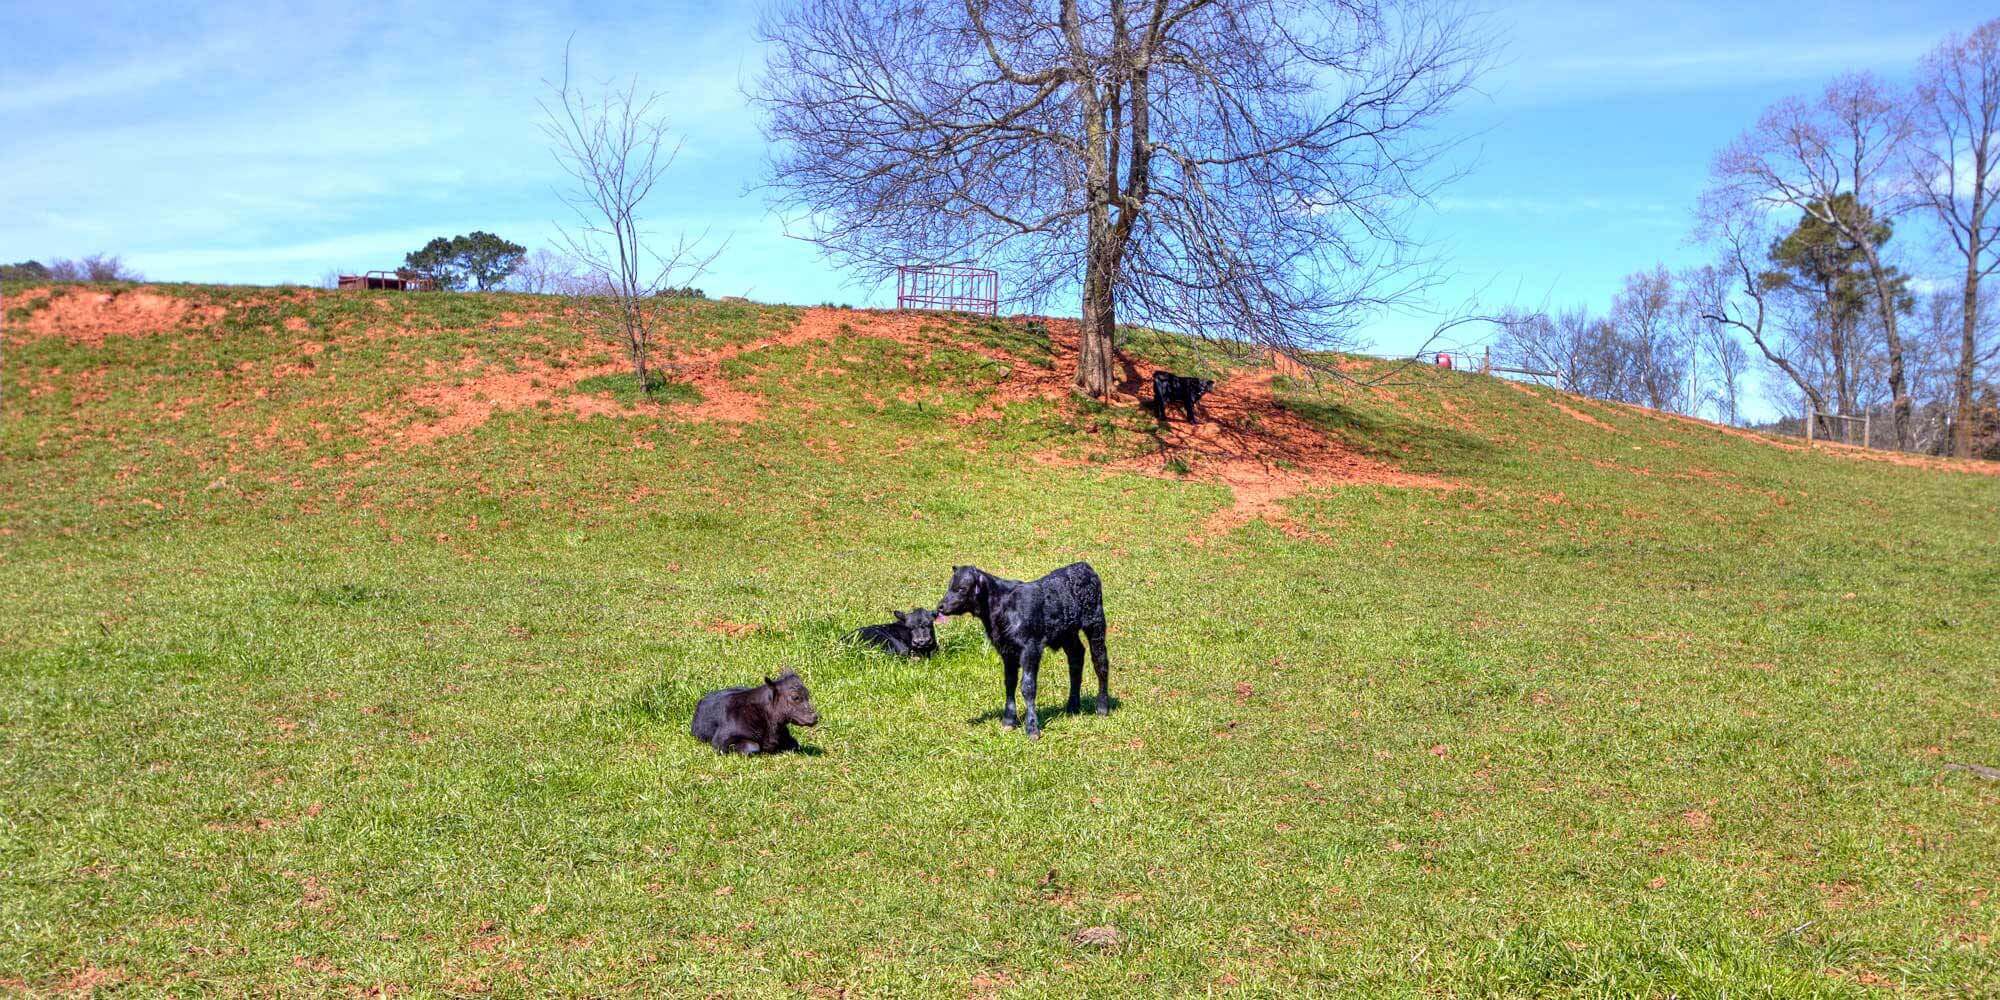 Calves in a field